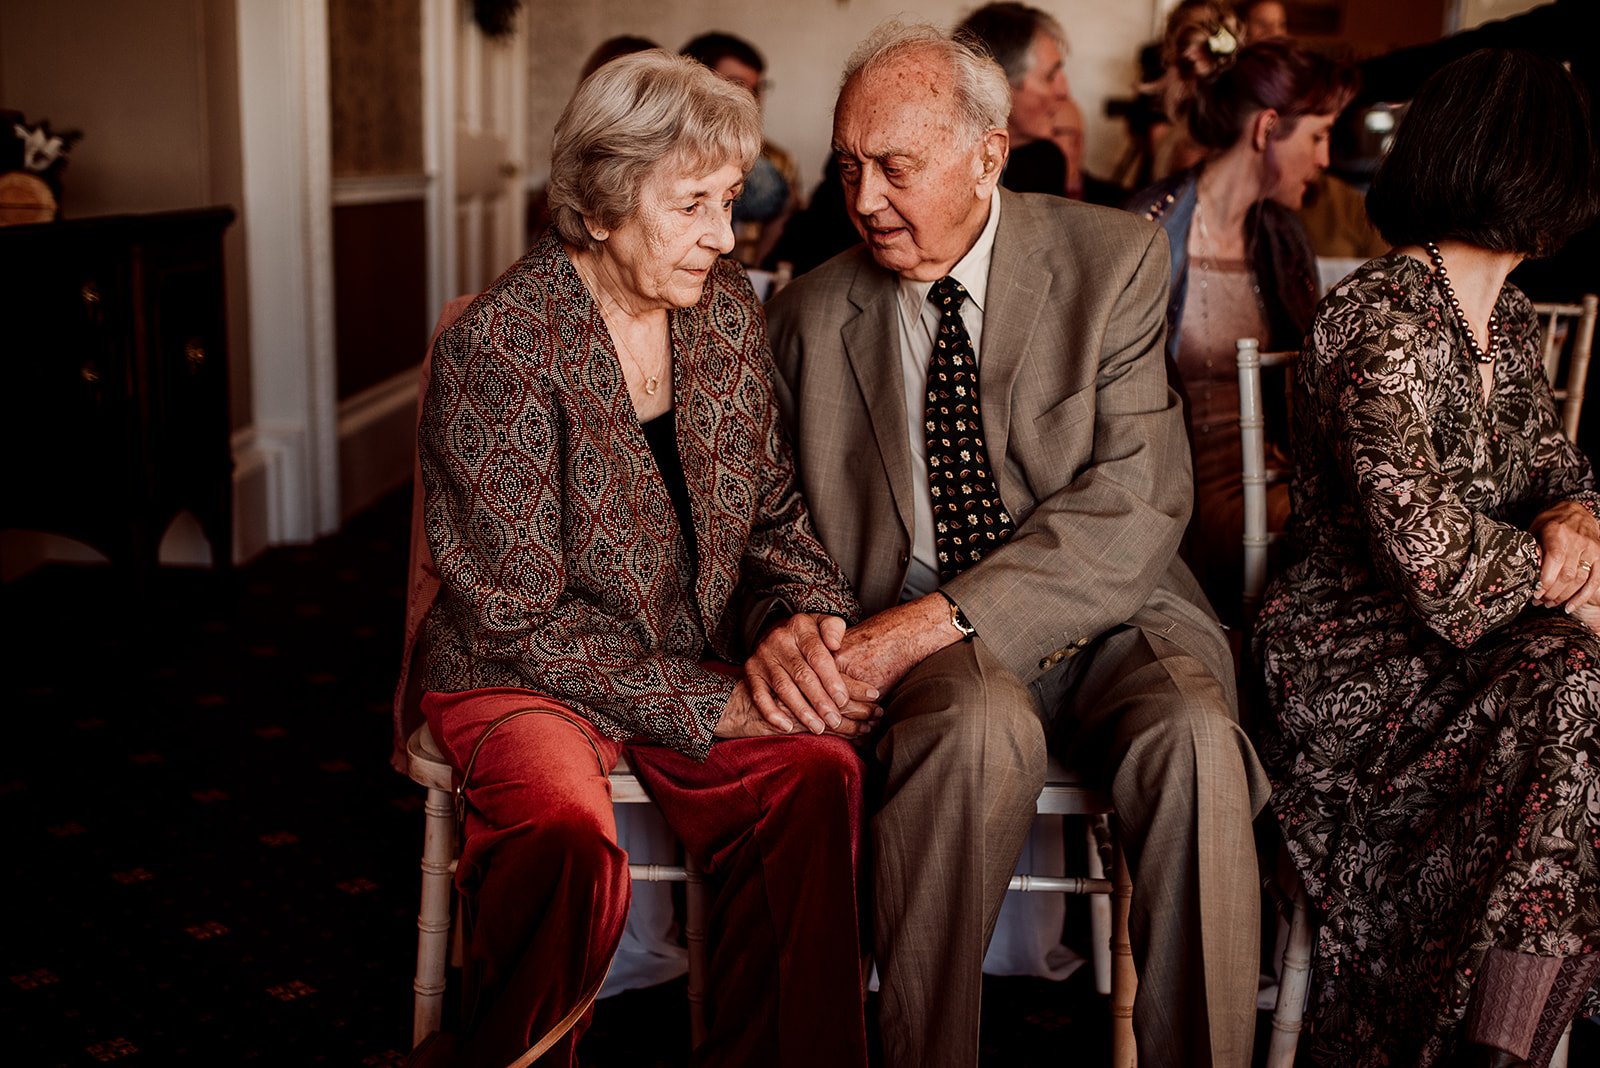 An elderly couple holding hands